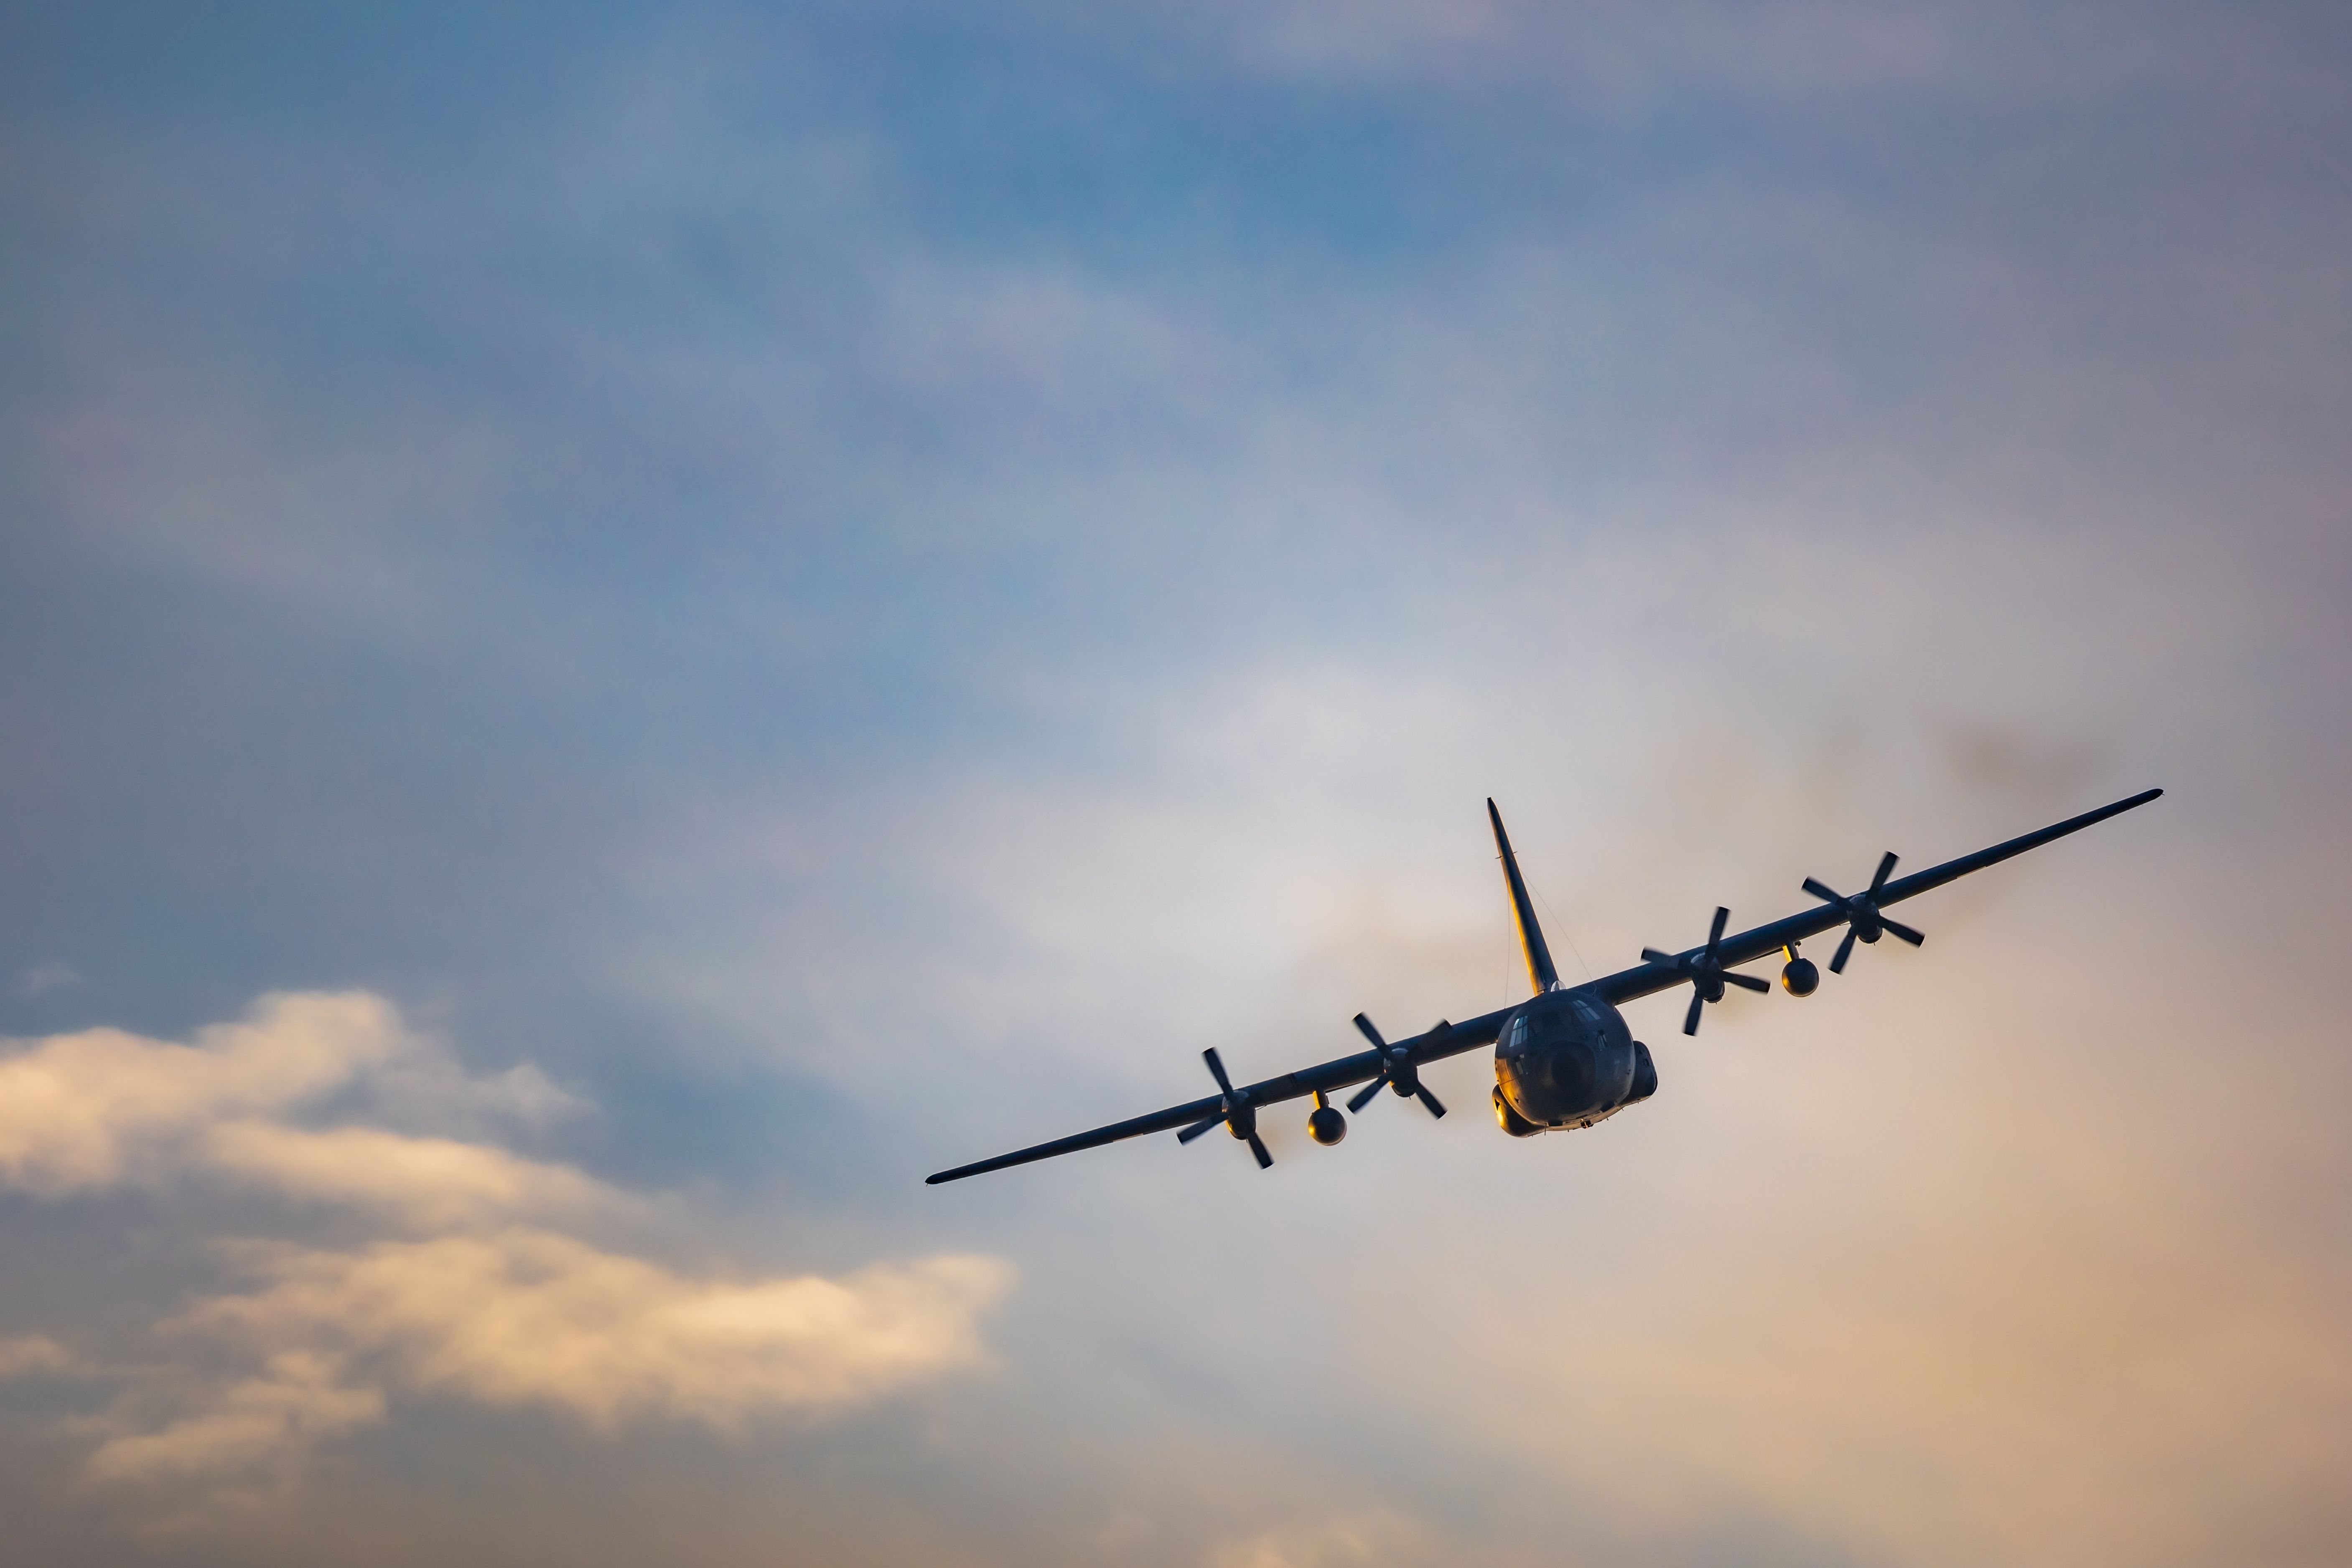 A C-130 Hercules flying in the sky.